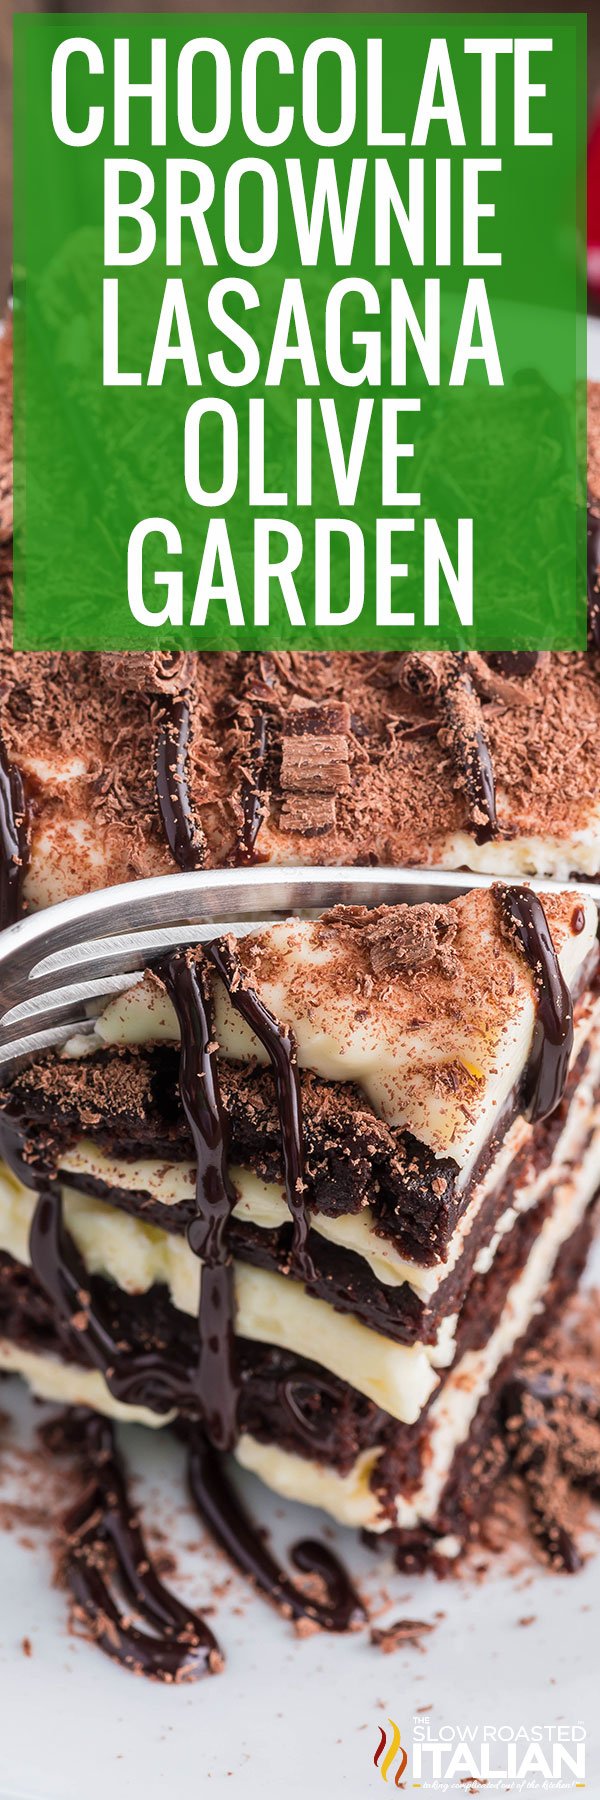 Chocolate Brownie Lasagna Olive Garden - PIN